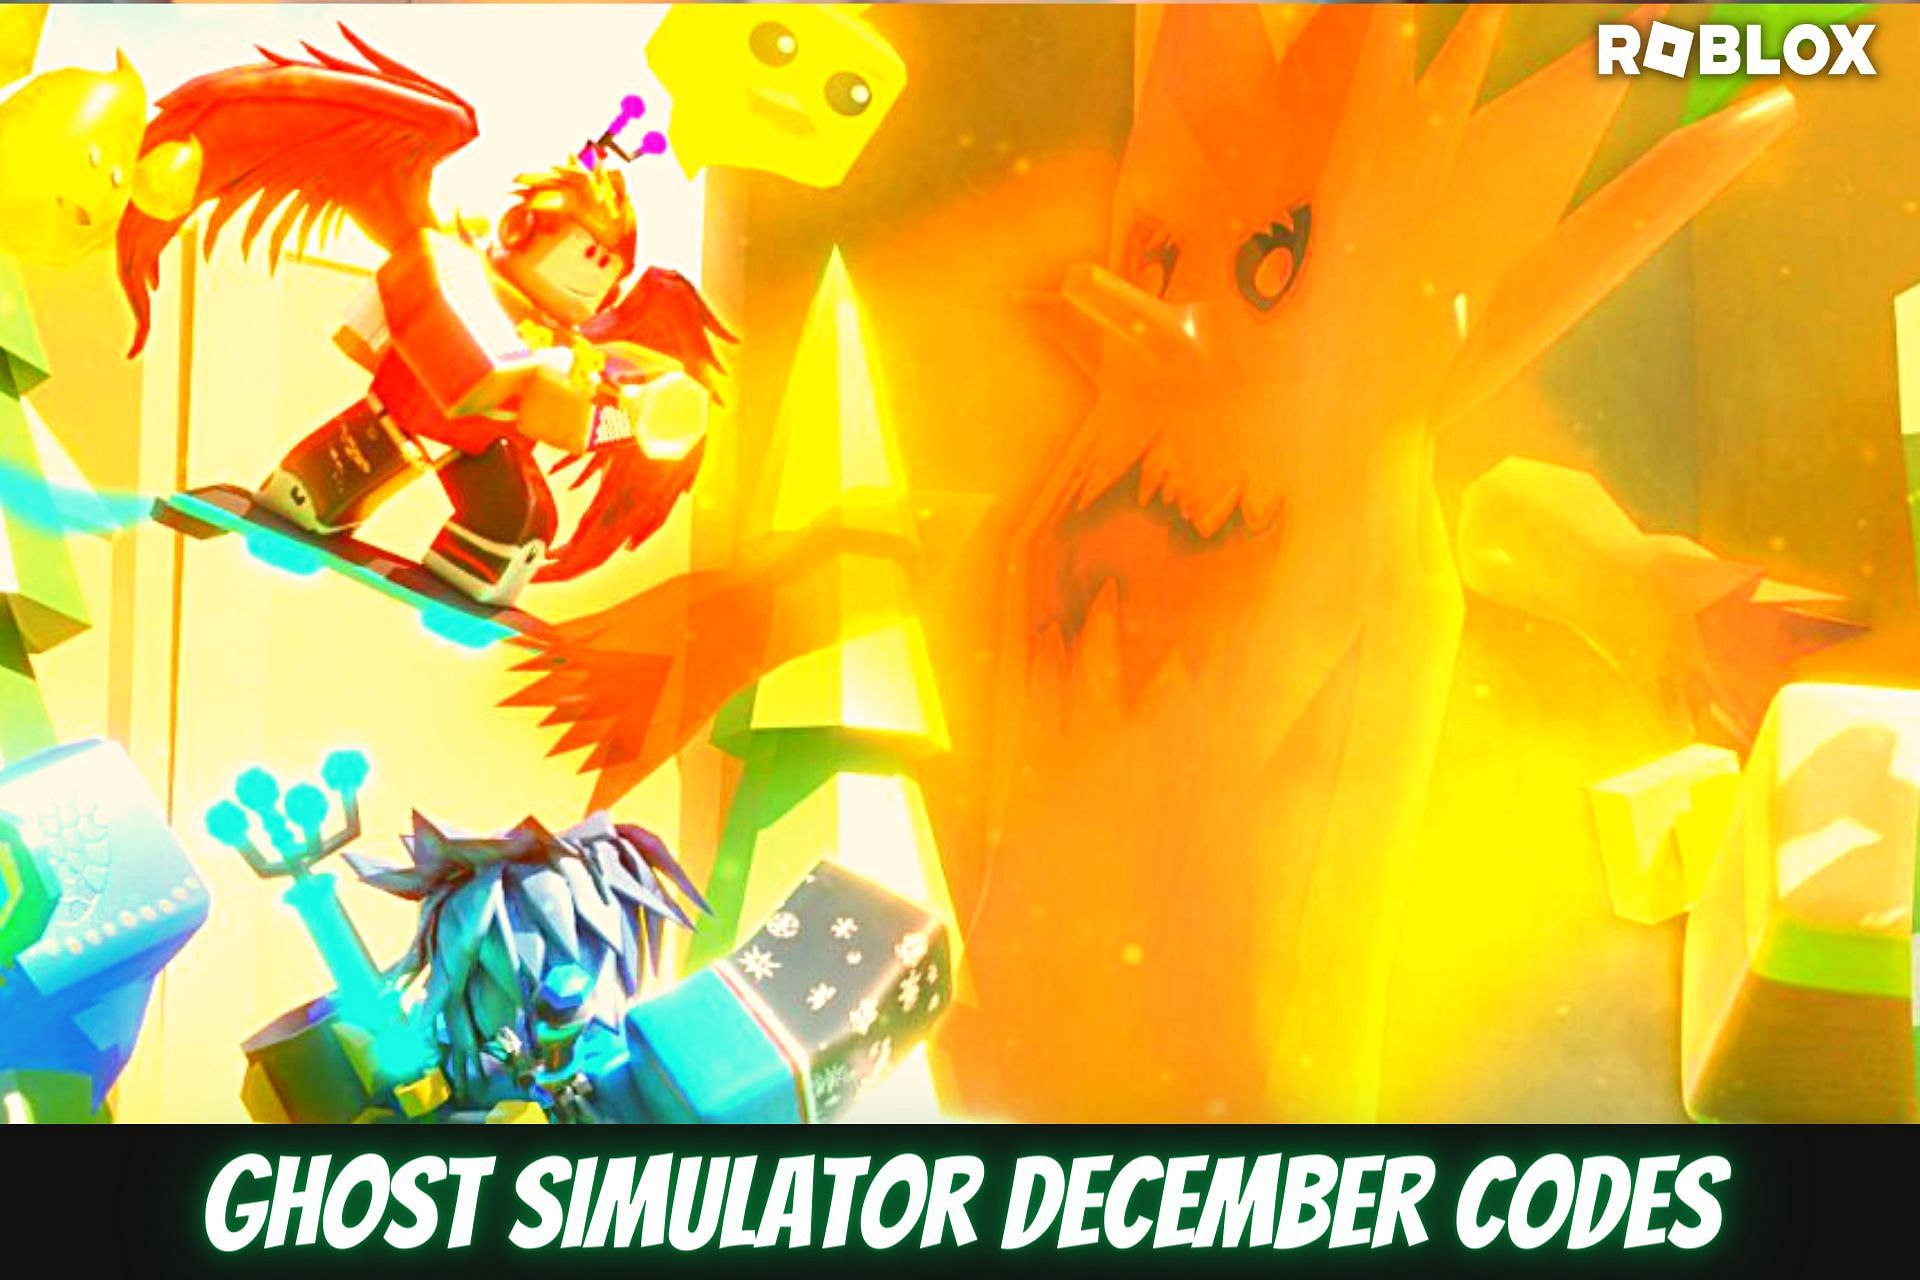 Roblox Ghost Simulator December codes